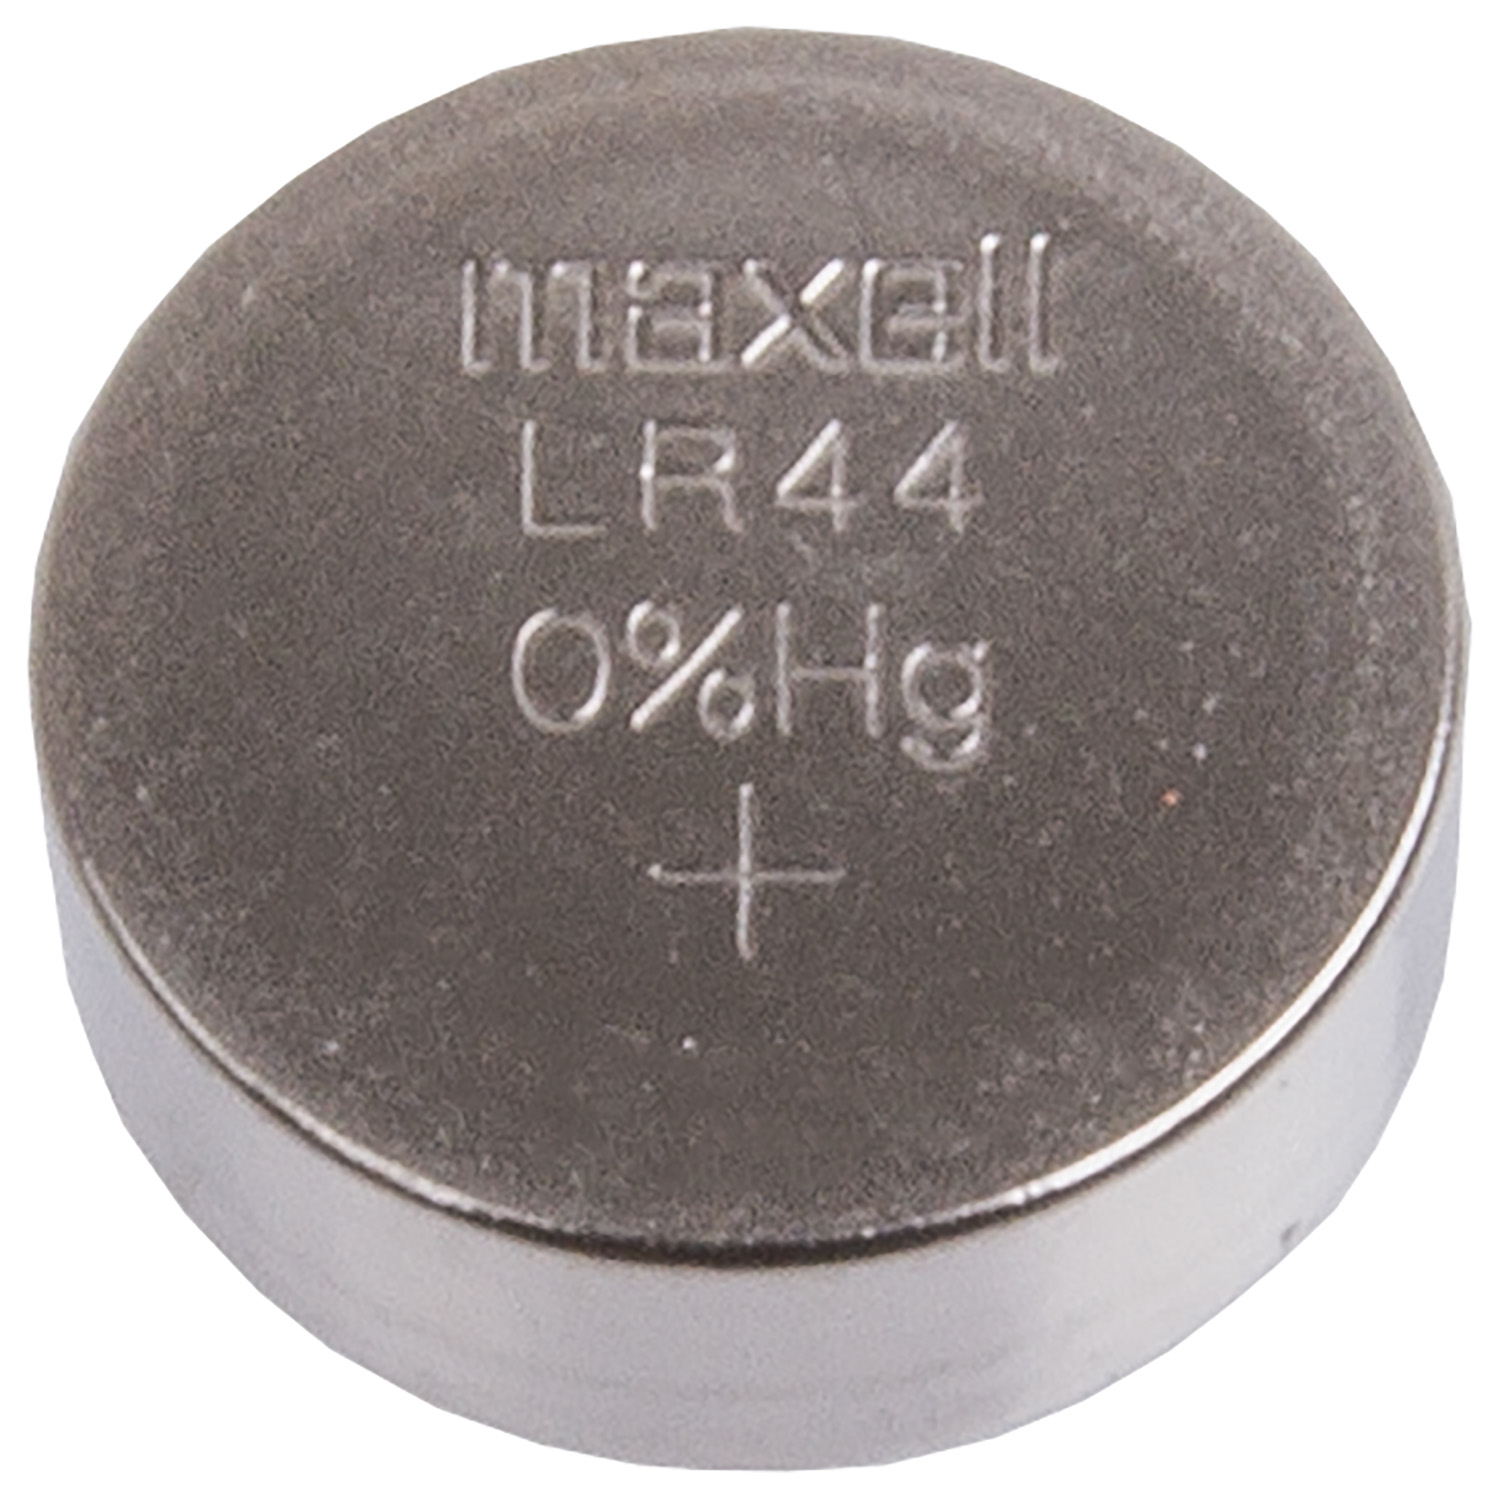 maxell lr44 battery equivalent